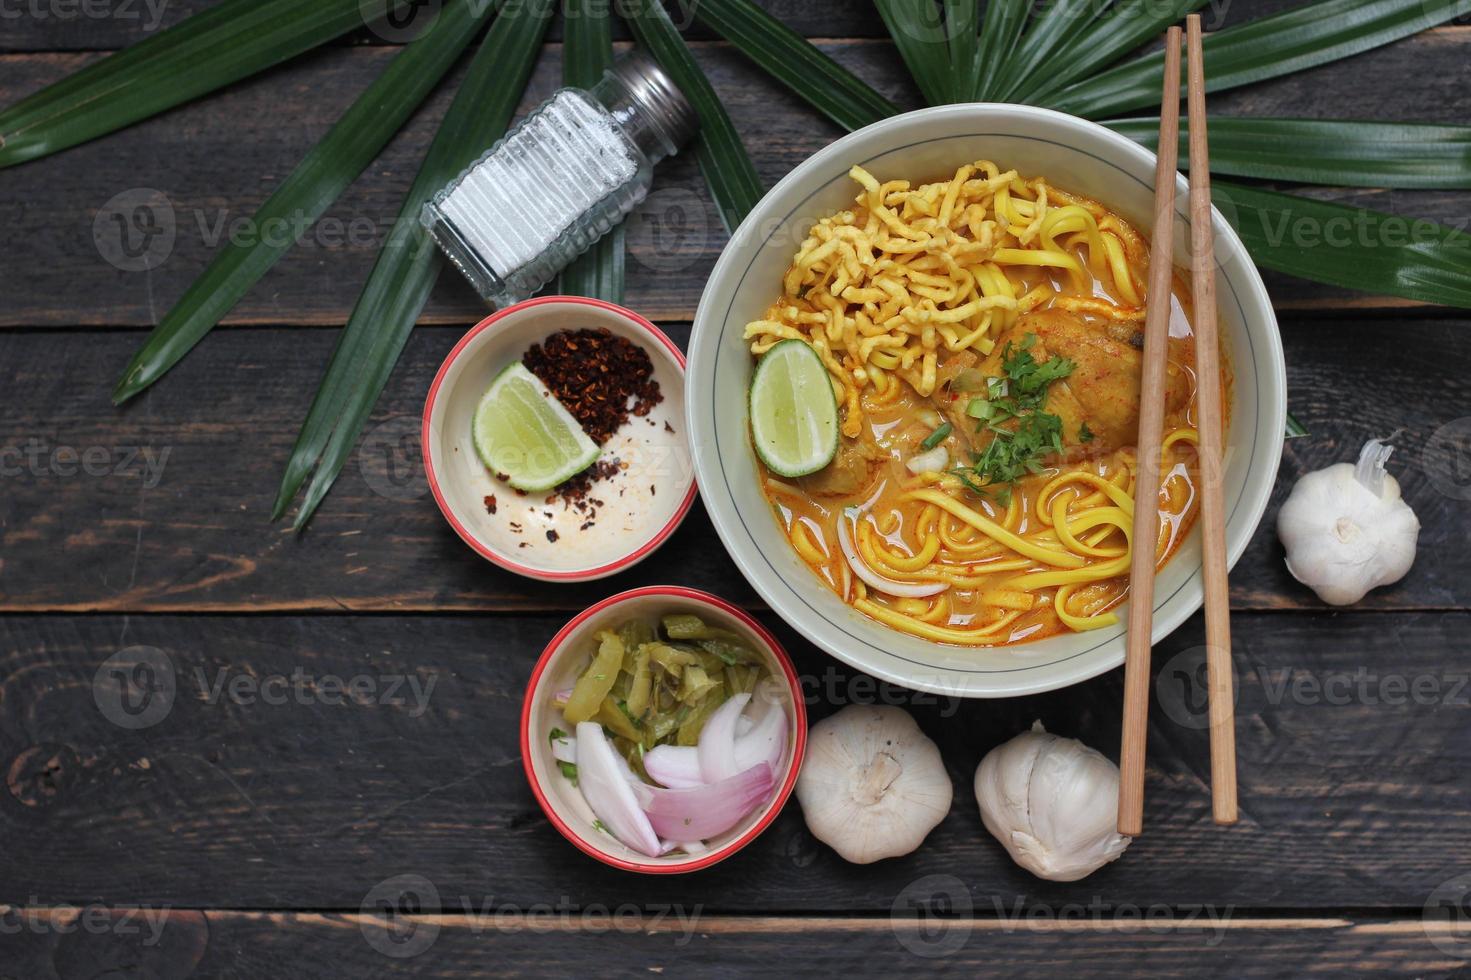 khao soi recept, khao soi, khao soi kai, thai noedels khao soi, kip curry met kruiden geserveerd op houten tafel foto